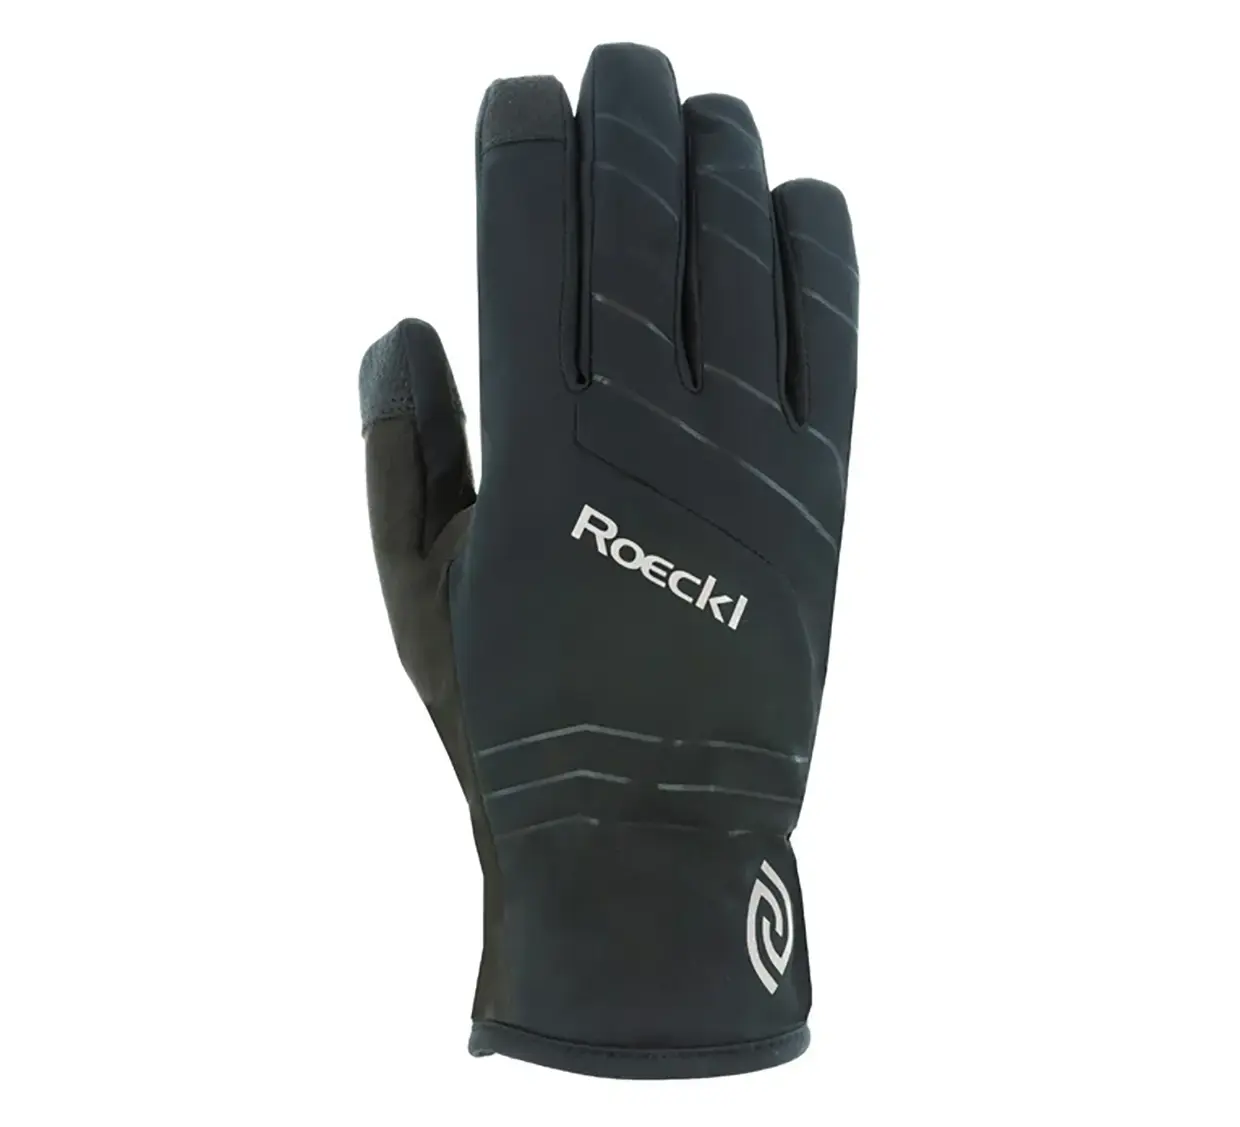 Roeckl Rosegg GTX Winter Fietshandschoenen Zwart